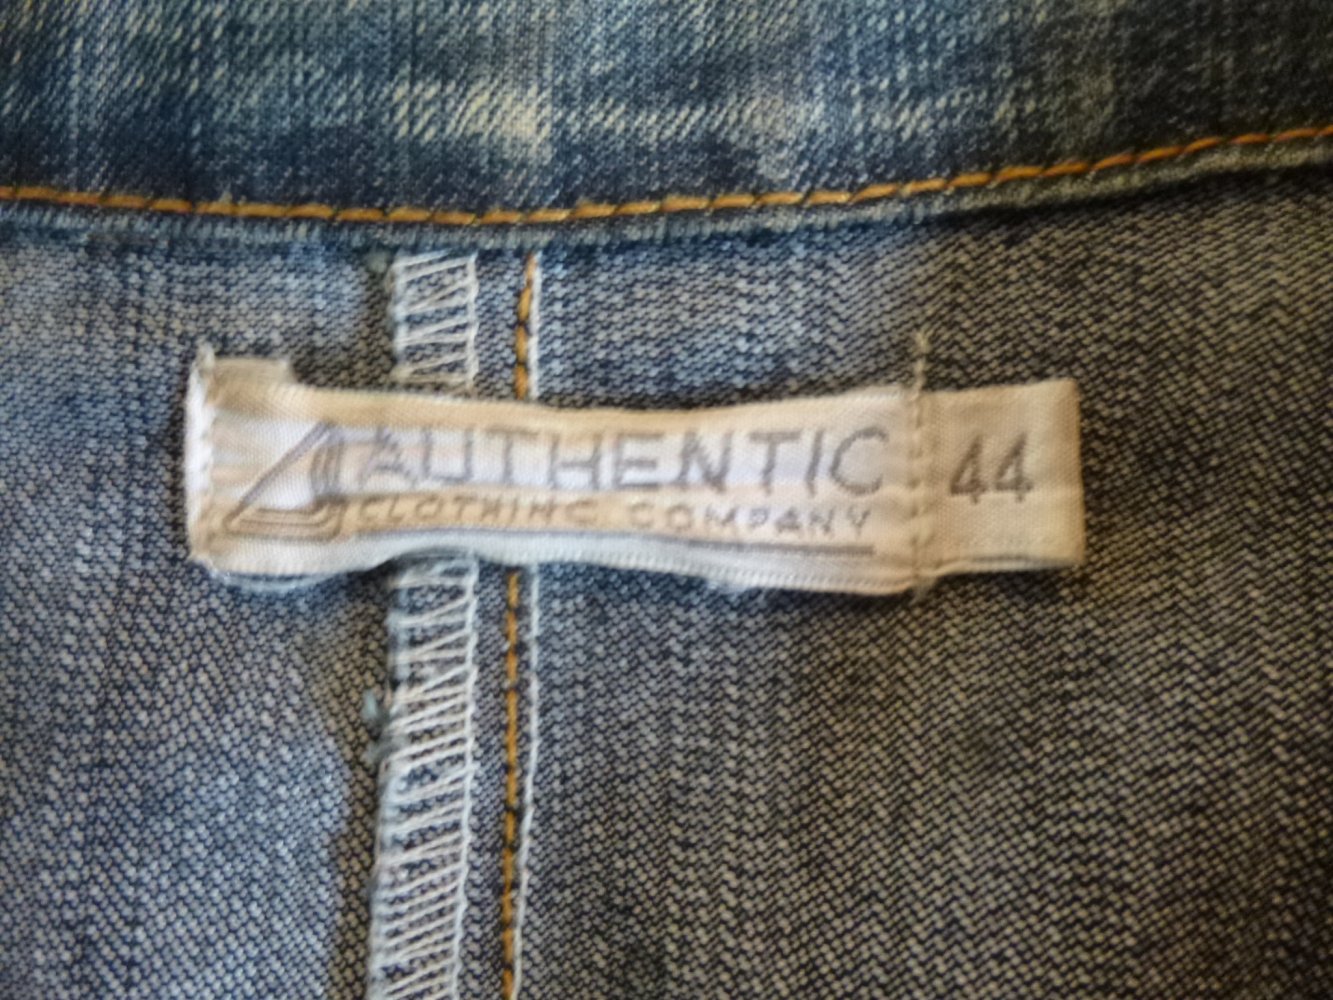  Authentic Clothing Company Jeansjacke blau mit Applikationen Gr.44 70% Baumwolle